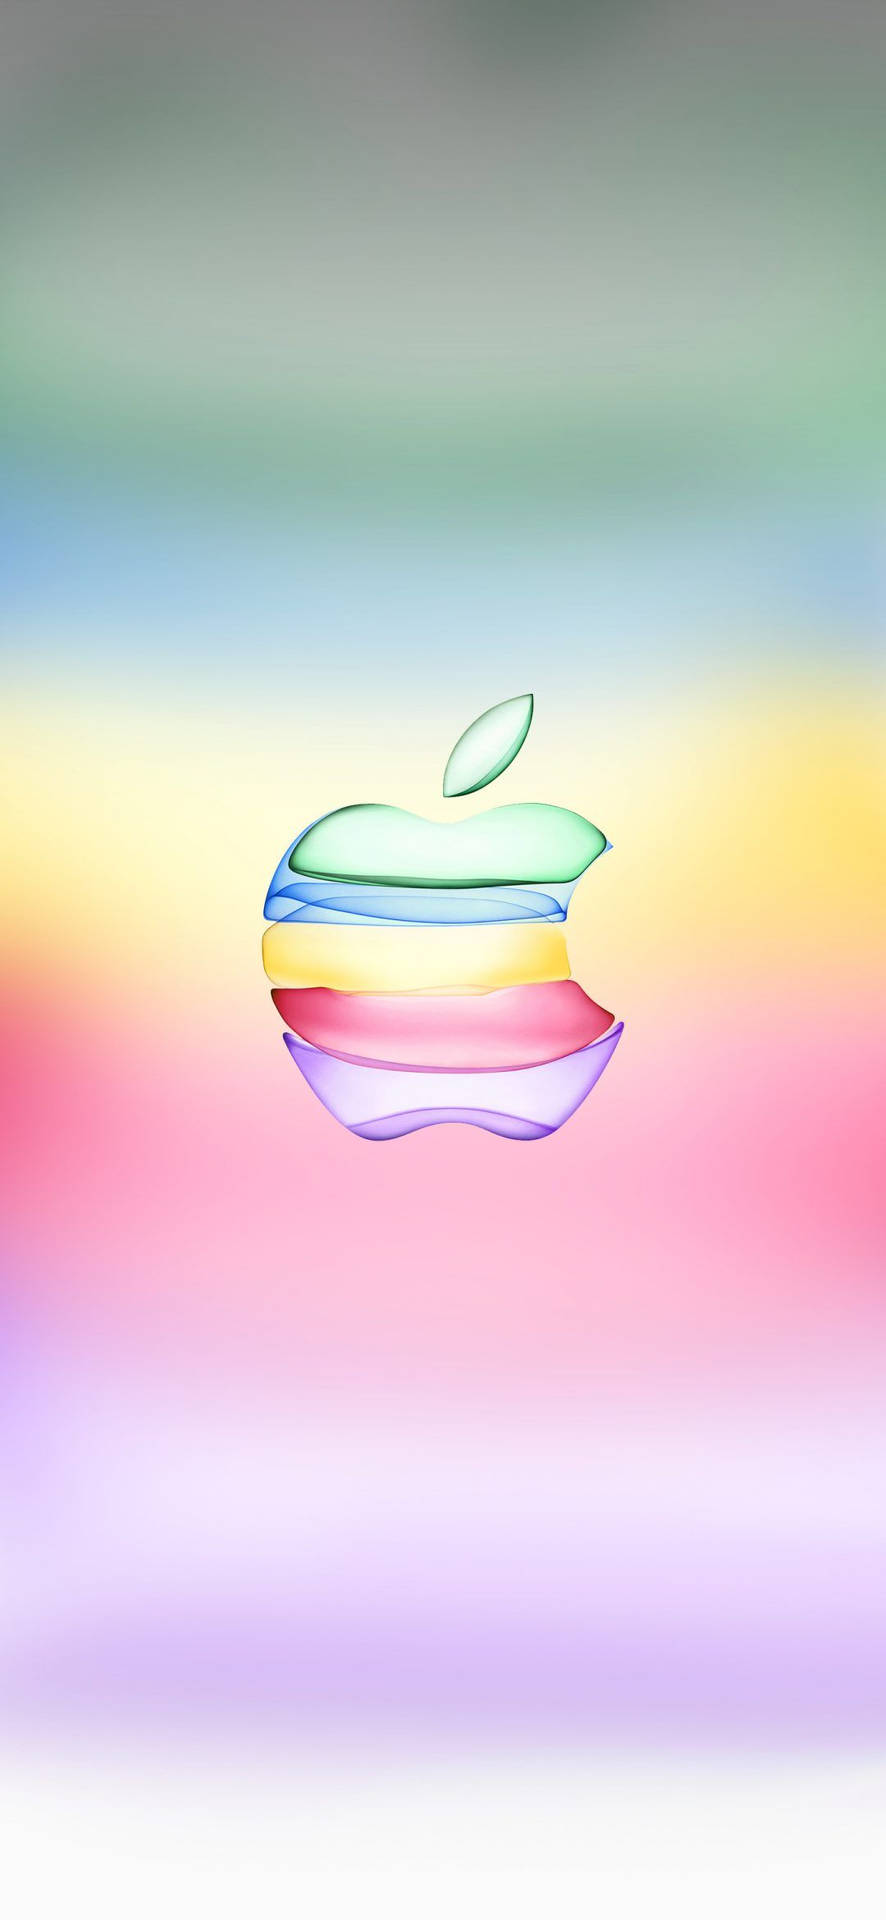 Apple Logo Iphone 11 Pro Max Background